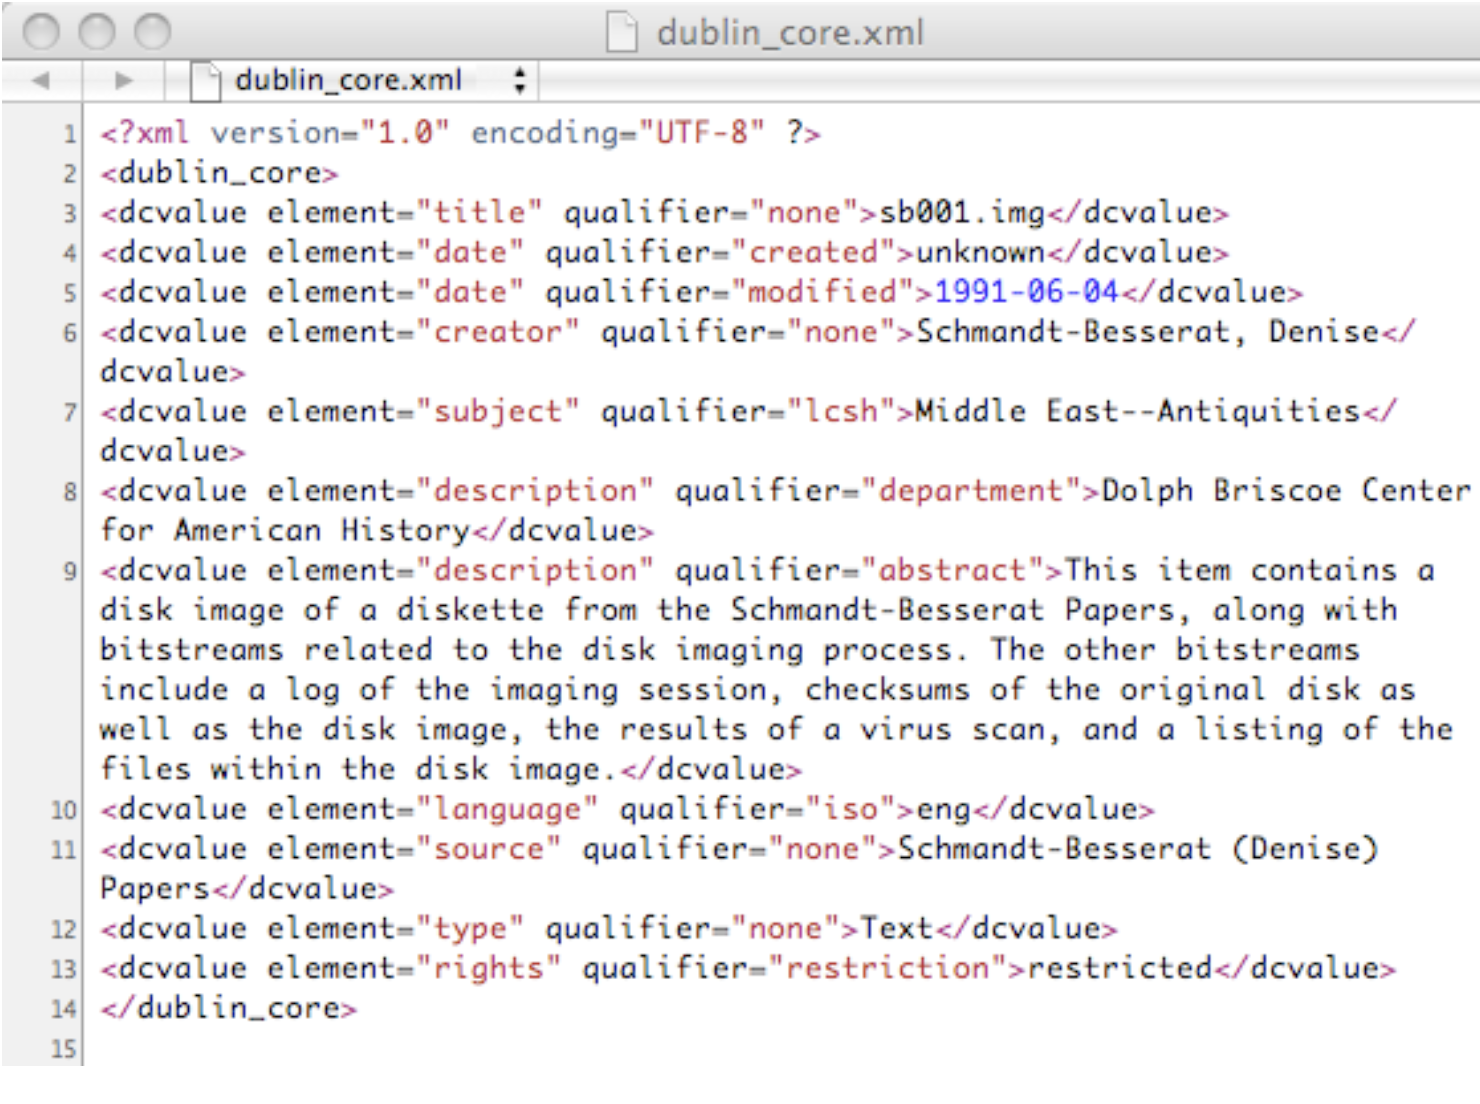 A snippet of XML in dublin core format.